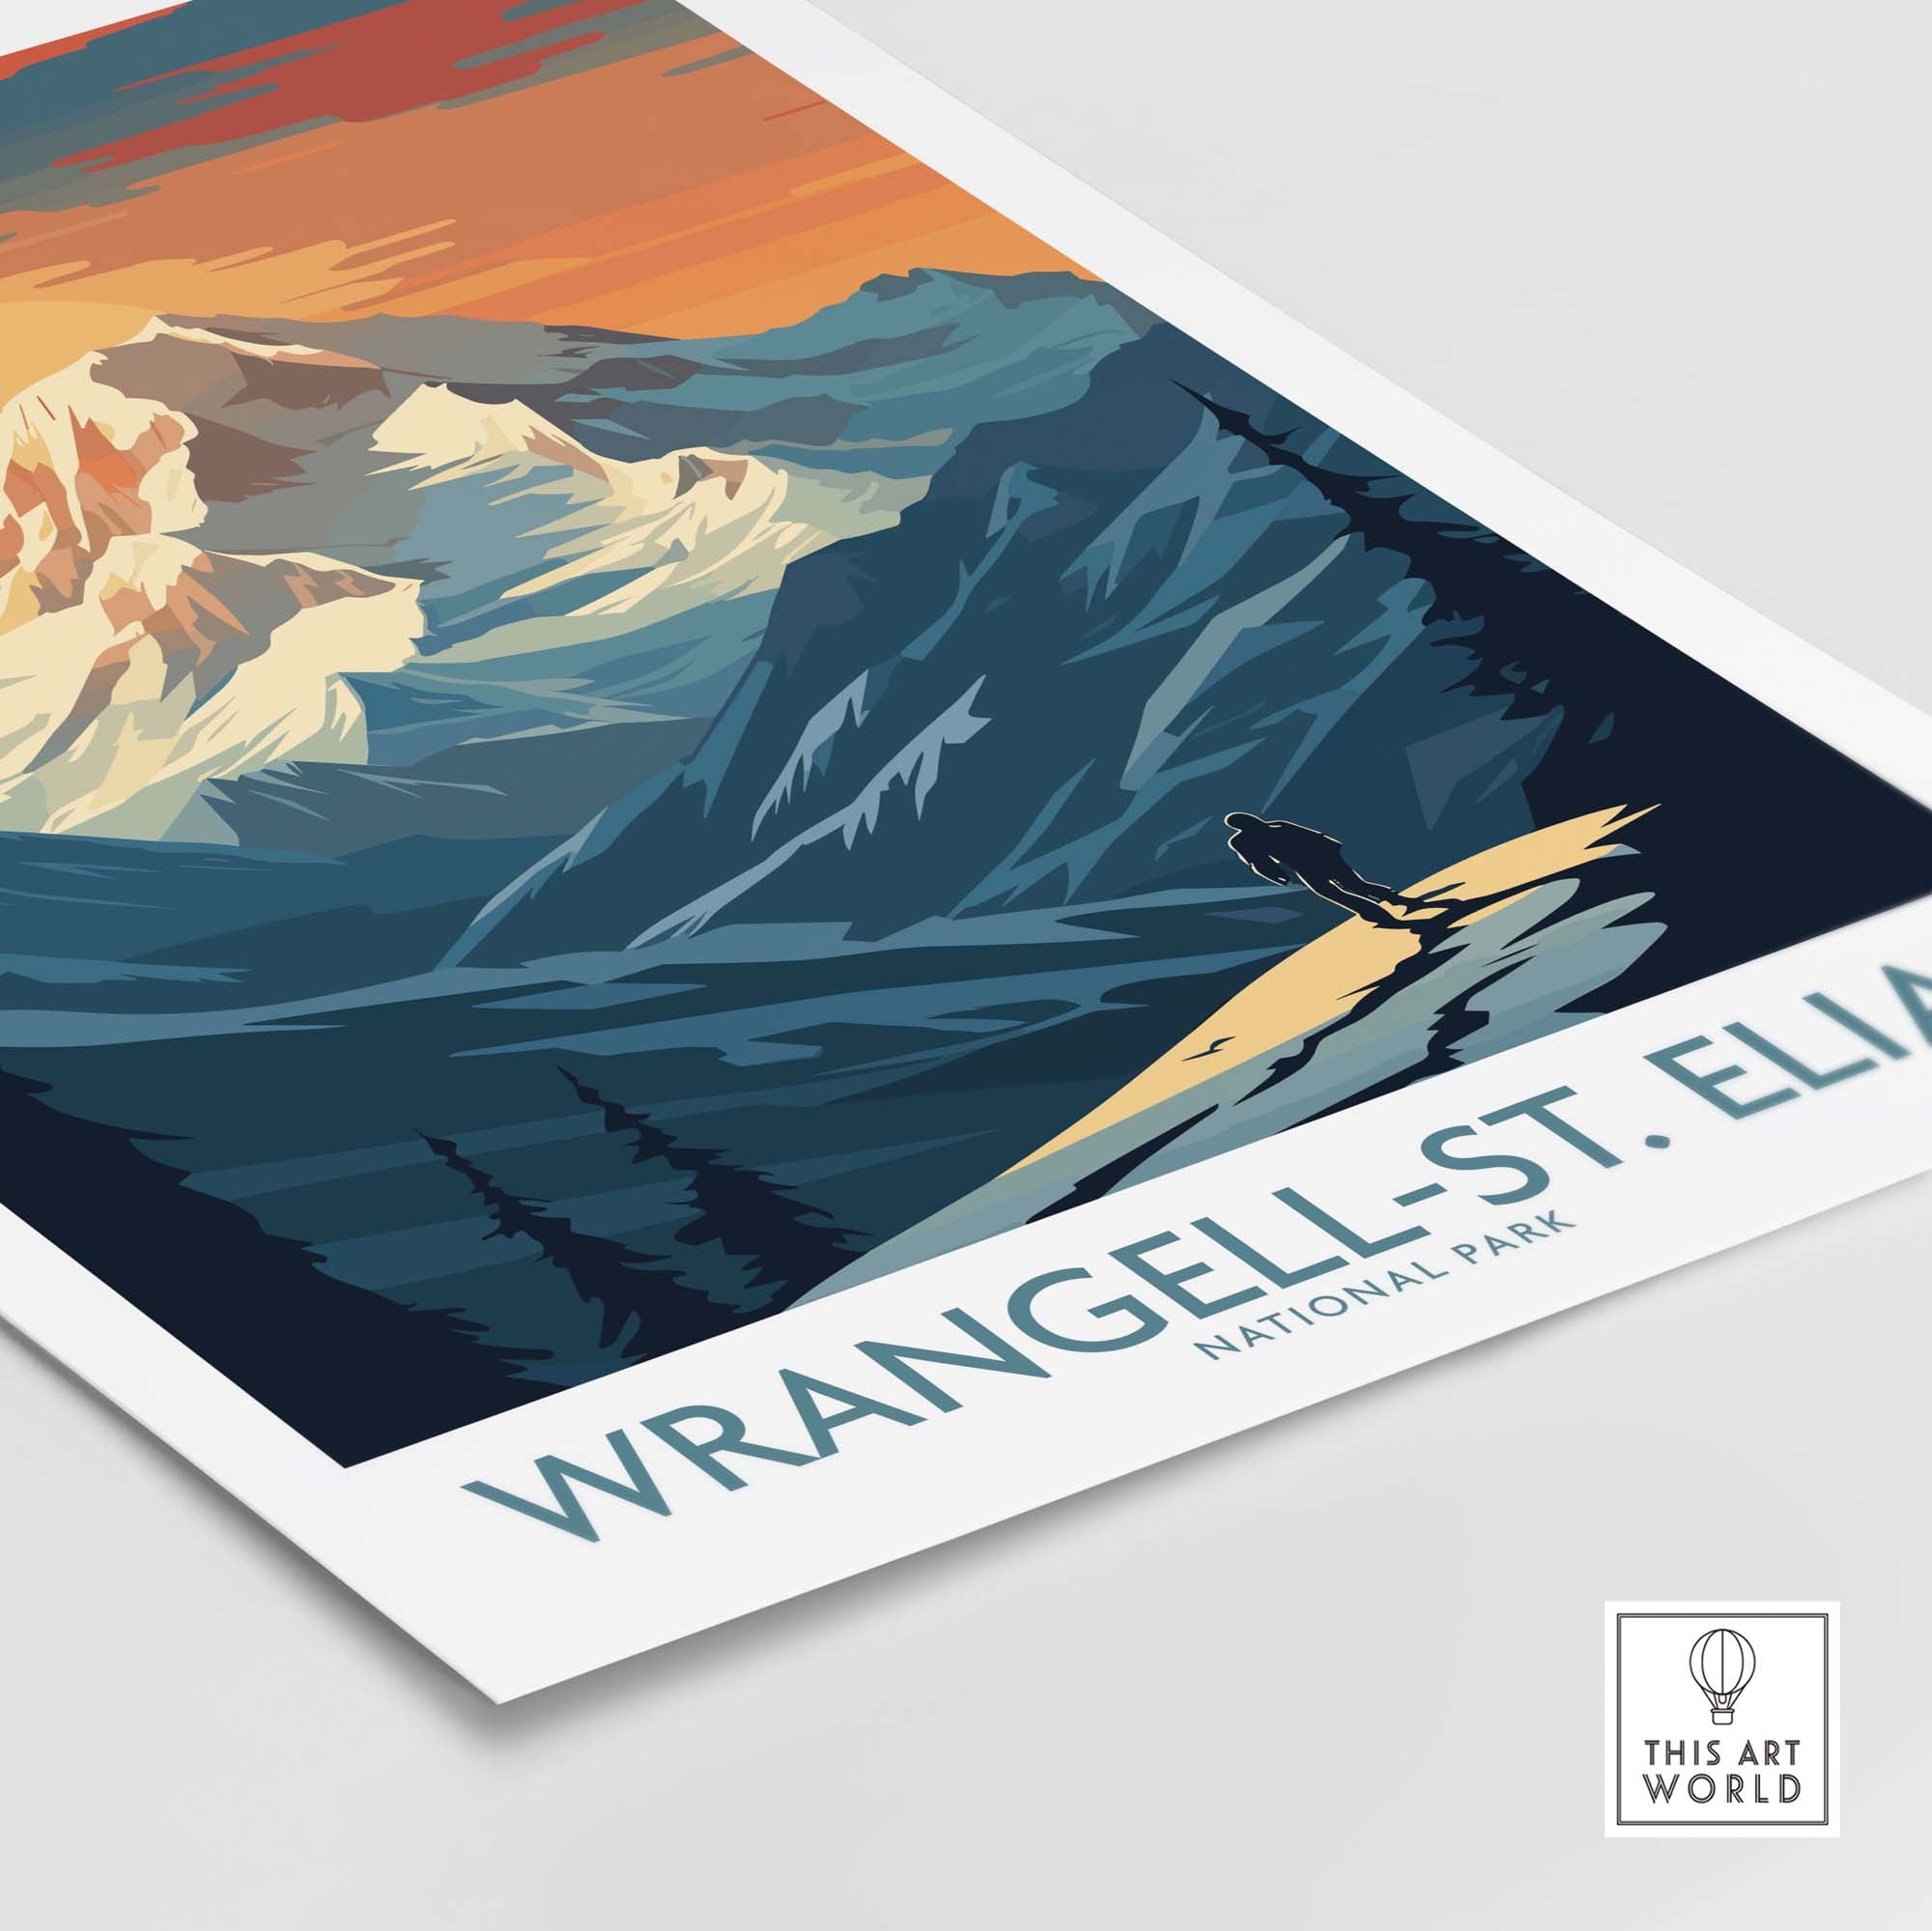 Wrangell-St. Elias National Park Print